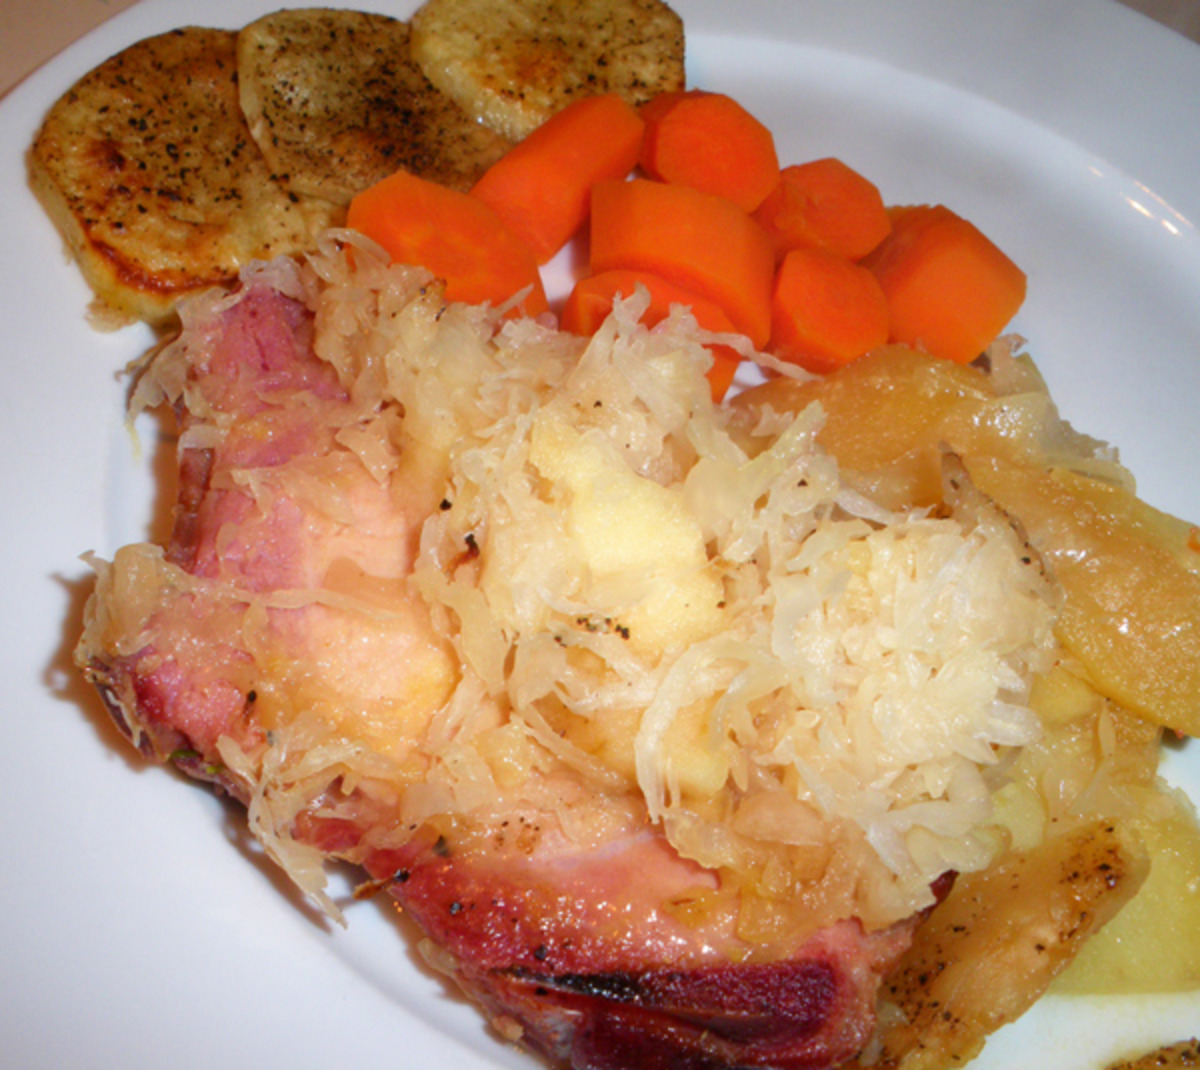 Smoked Pork Chop With Sauerkraut, Potatoes & Applesauce recipe